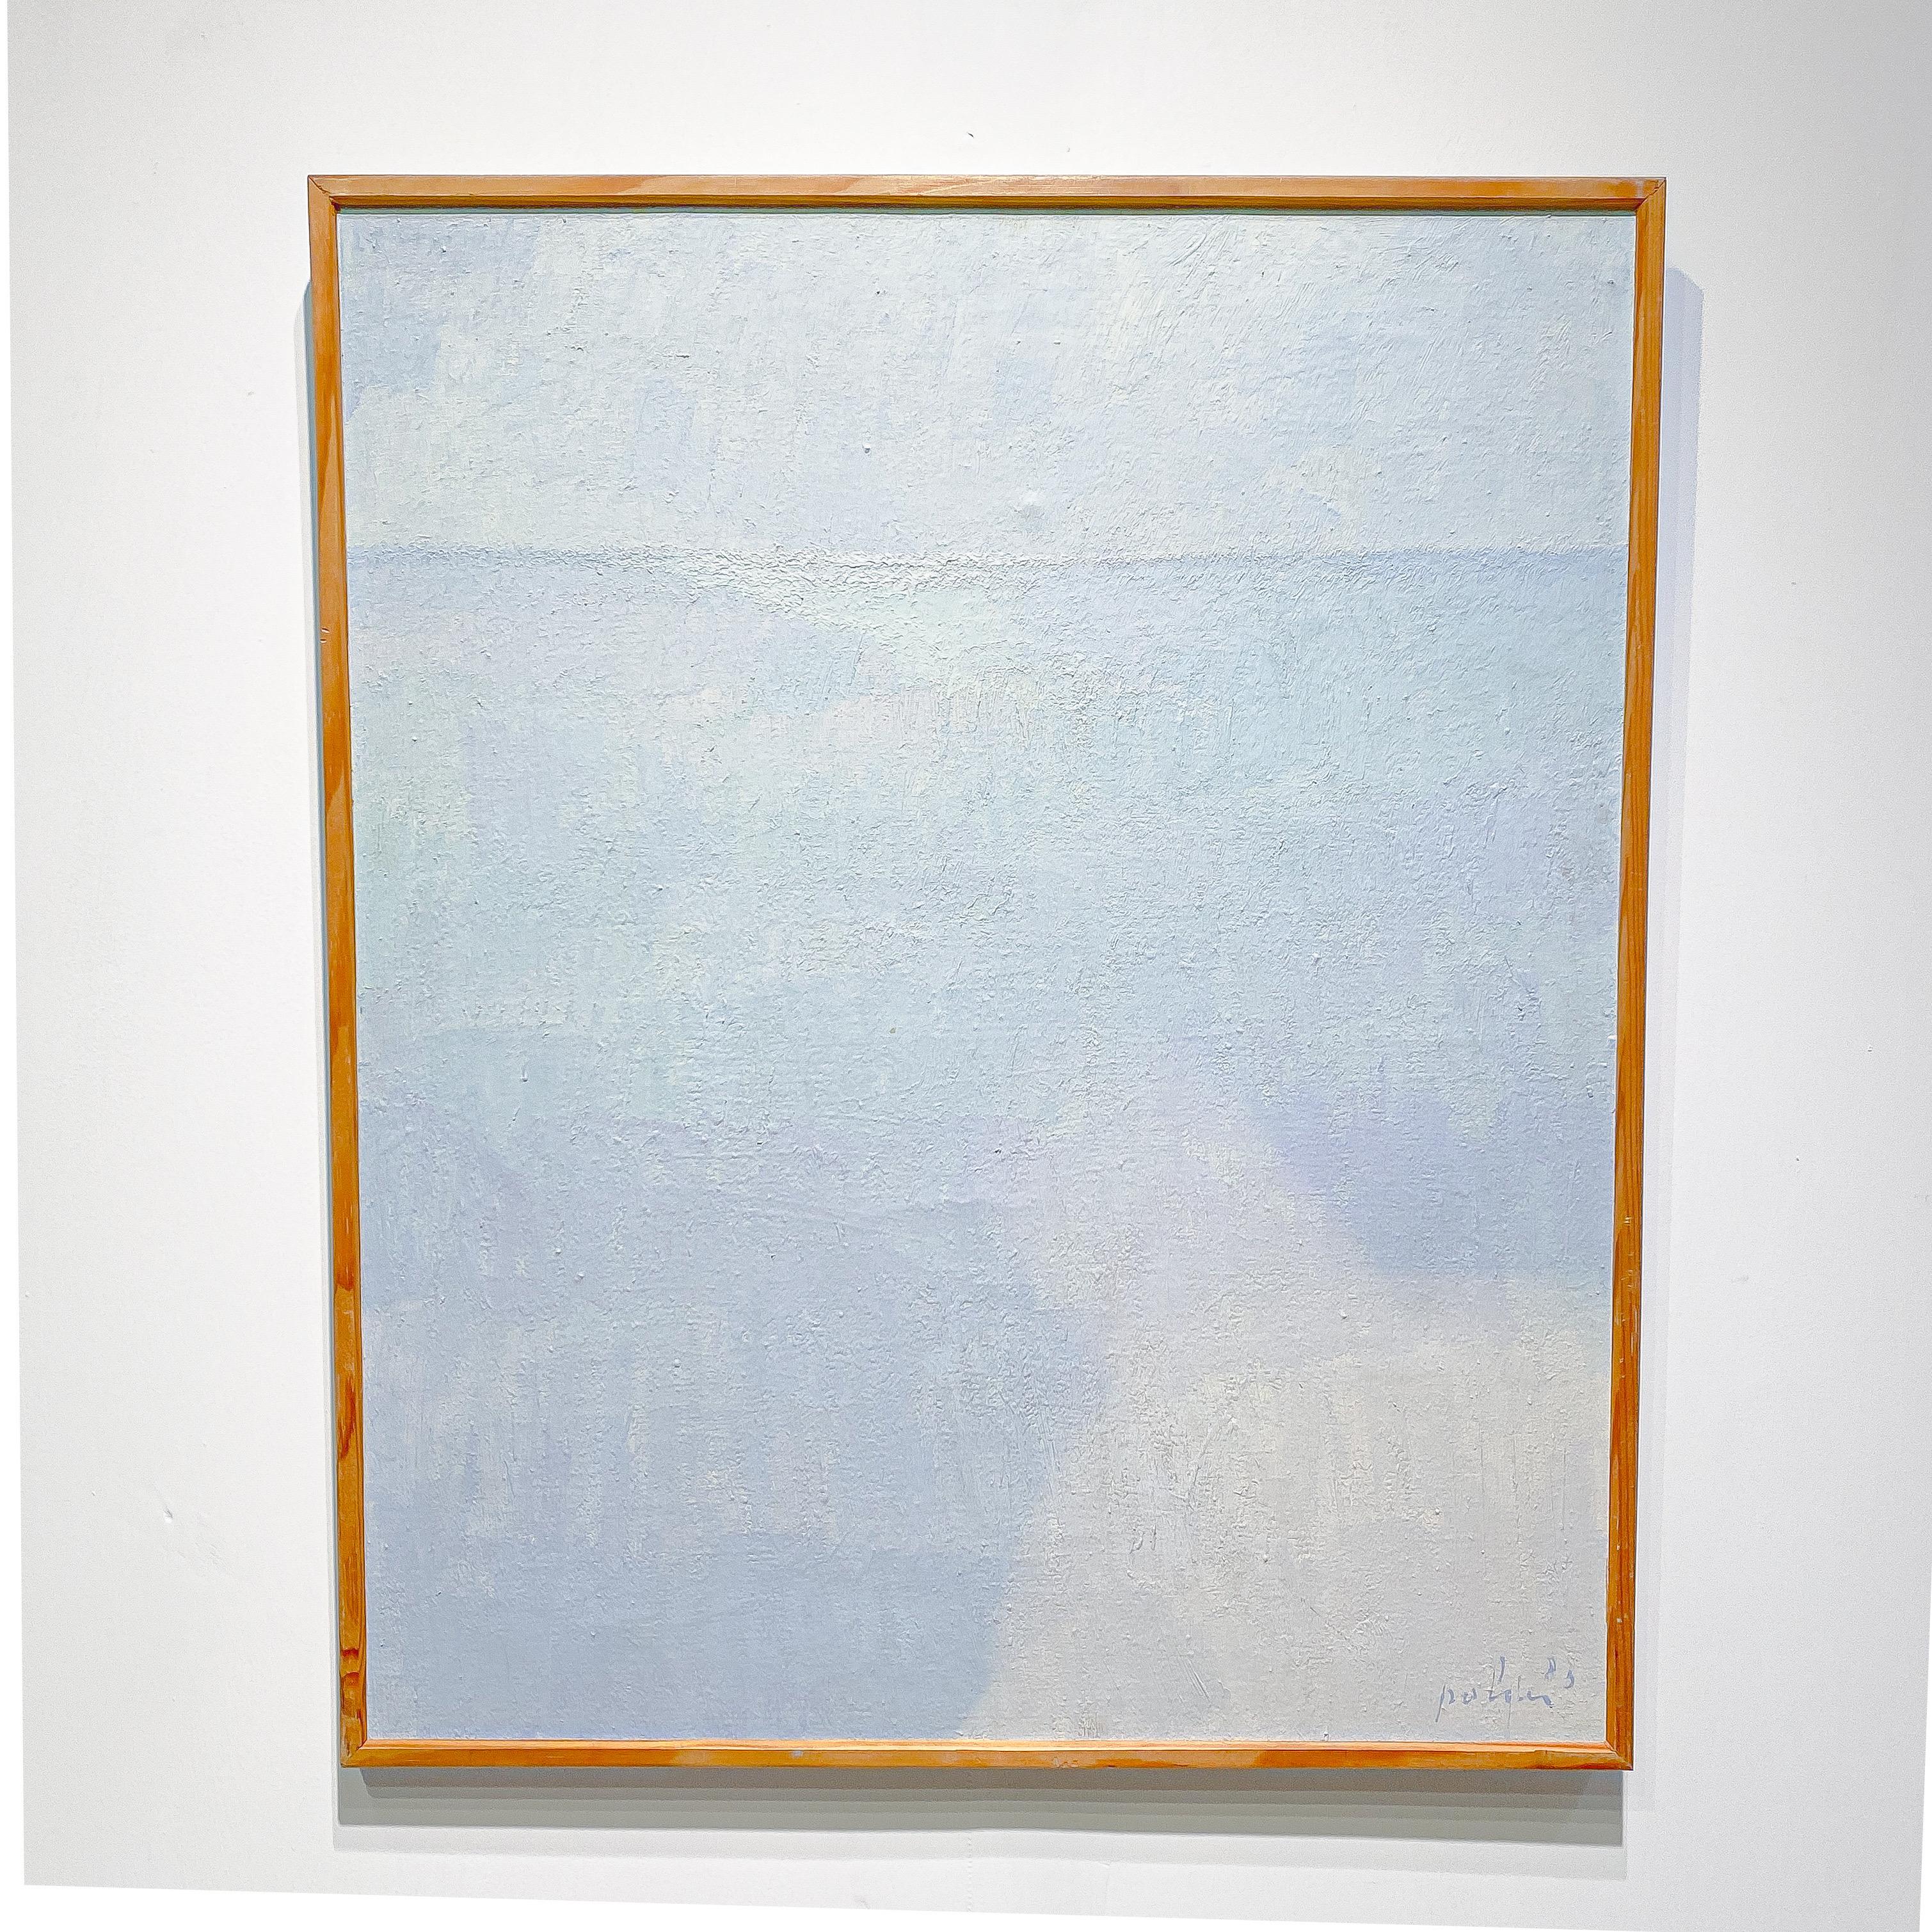 Dutch Rudi Polder, “Light on See”, Luminist Painting, 1980s Blue Tones